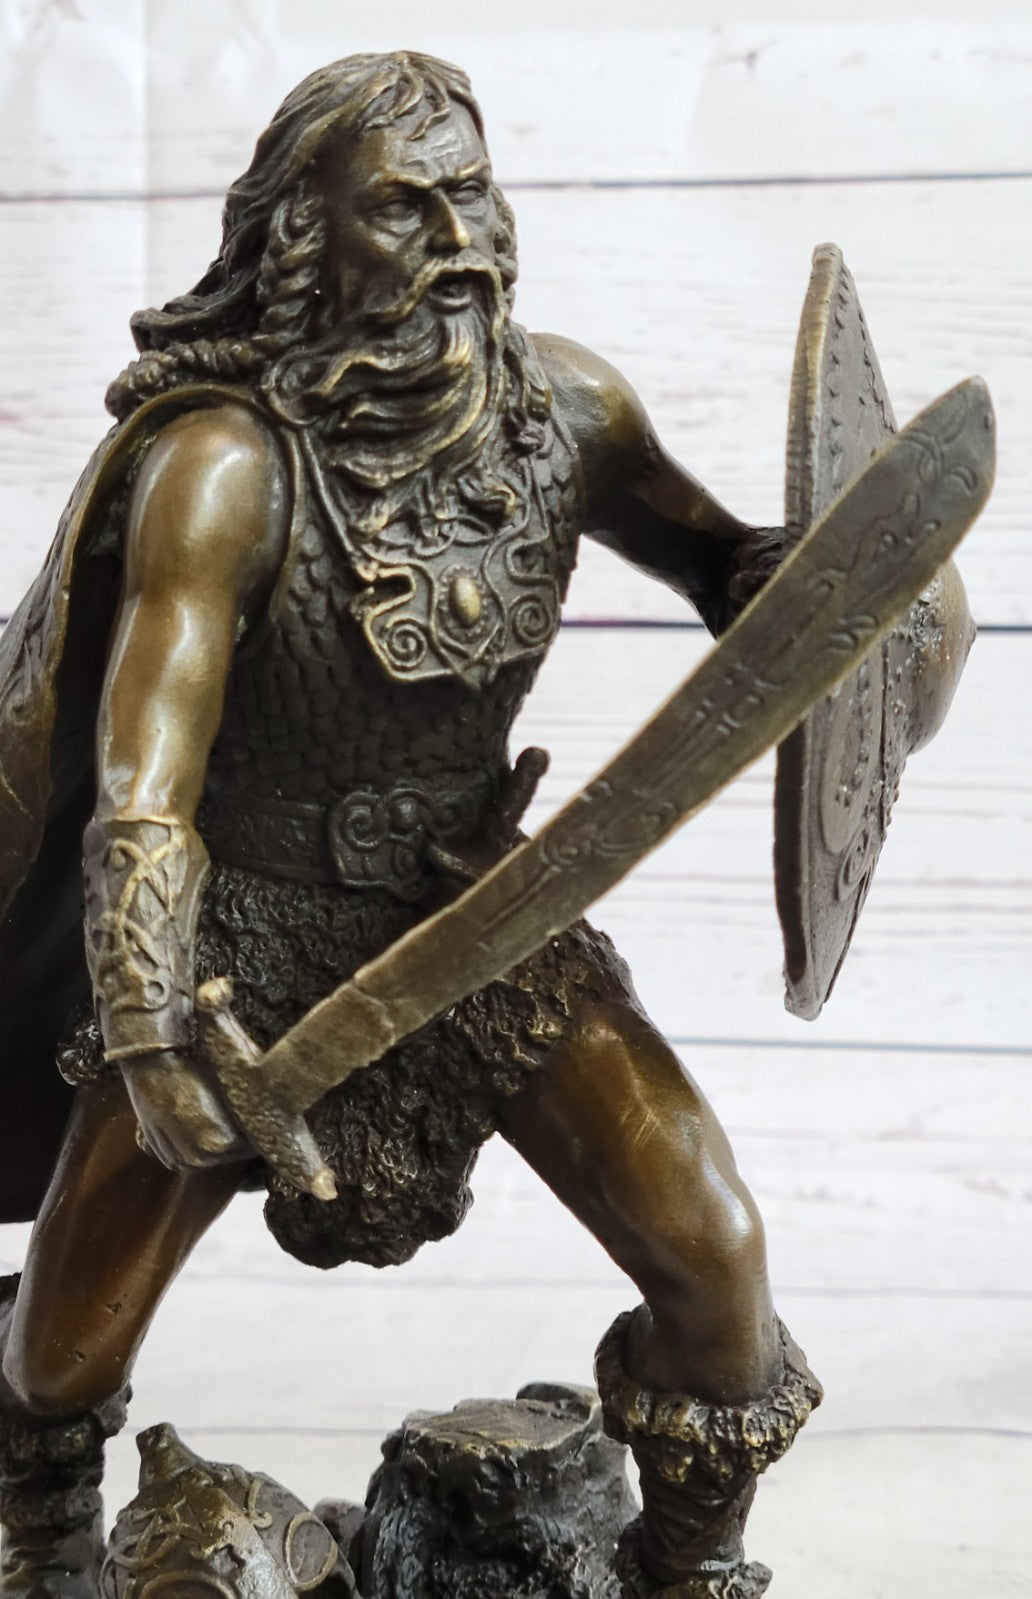 Handcrafted bronze sculpture SALE Base Marble Rare Sword With Warrior European